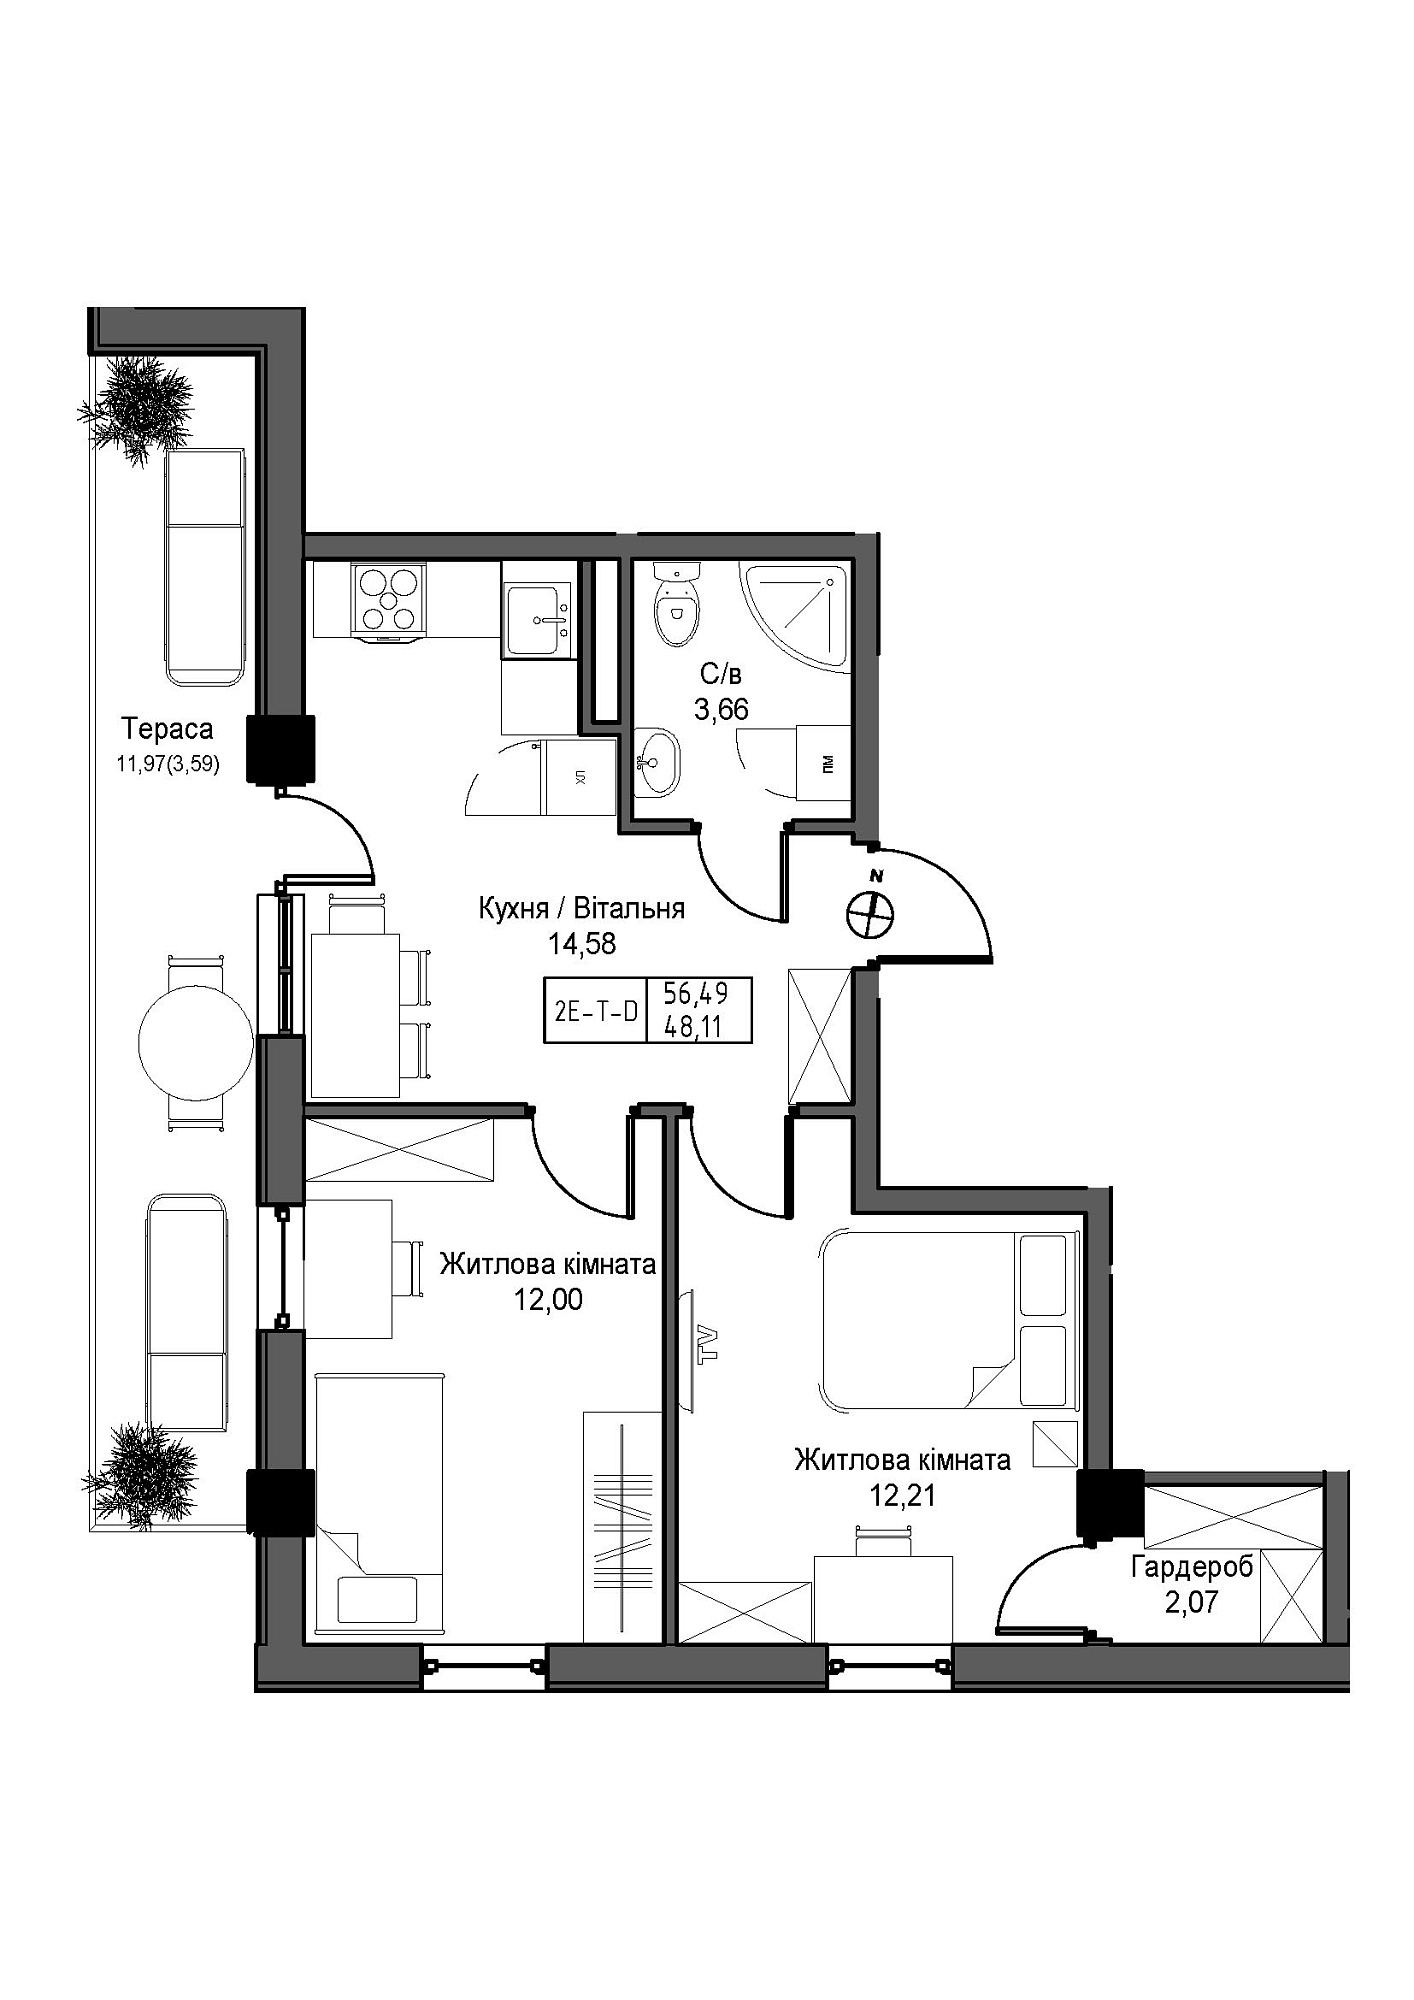 Планування 2-к квартира площею 48.11м2, UM-007-10/0011.